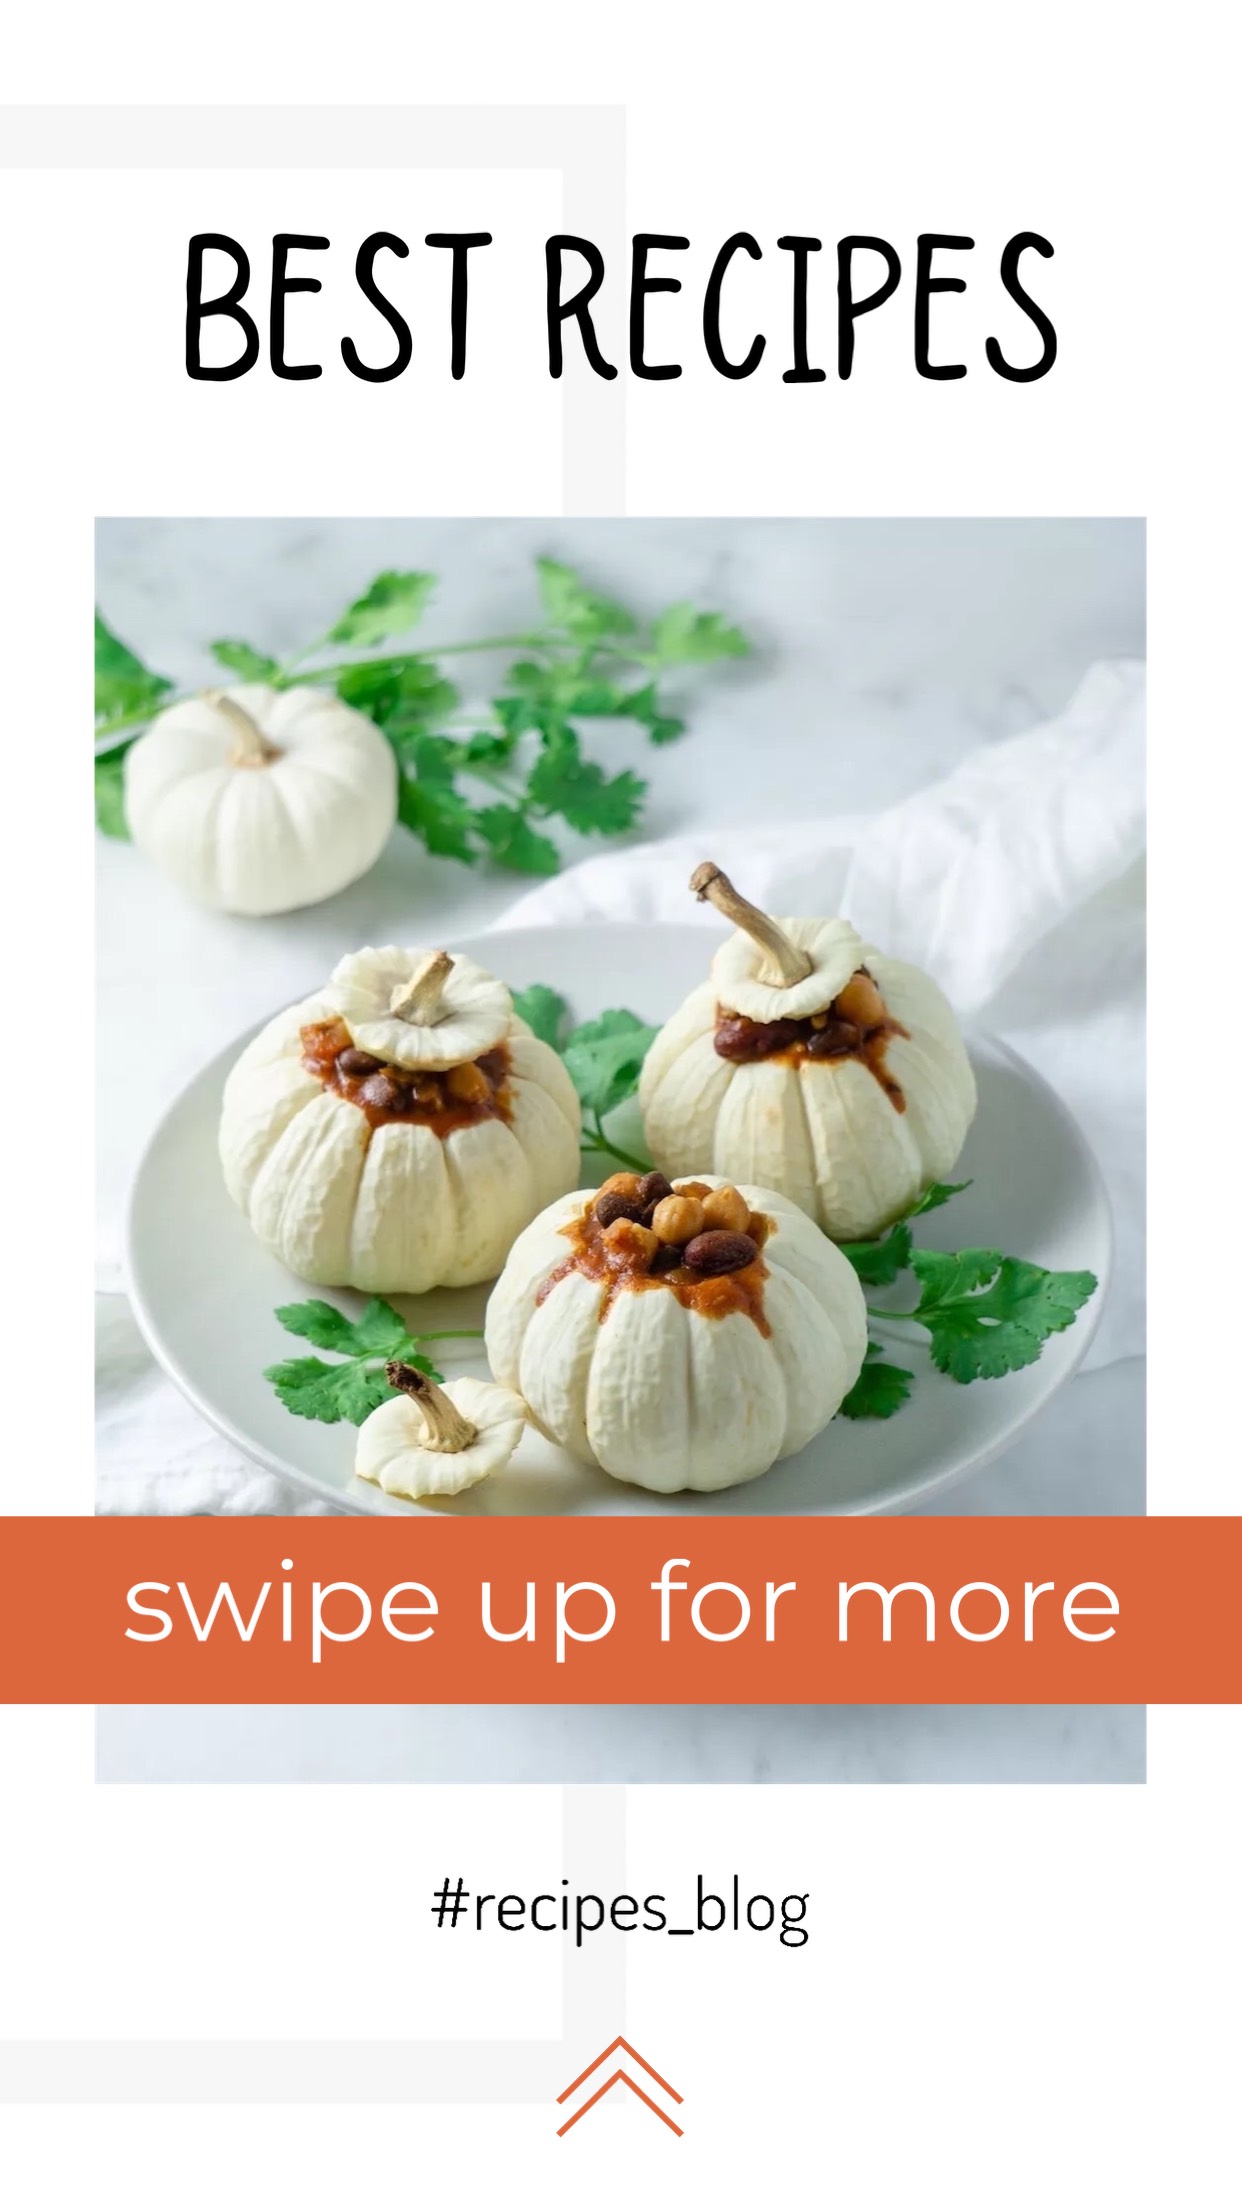 Pumpkin best recipes instagram story template